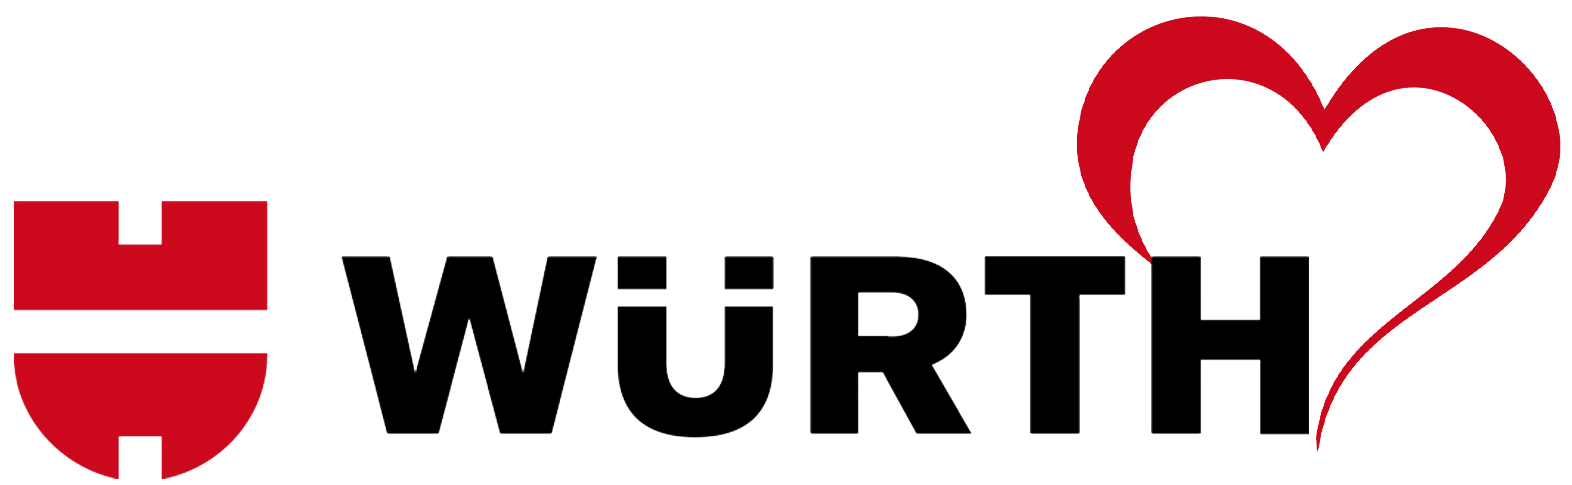 Würth Baer Supply Company Cares logo